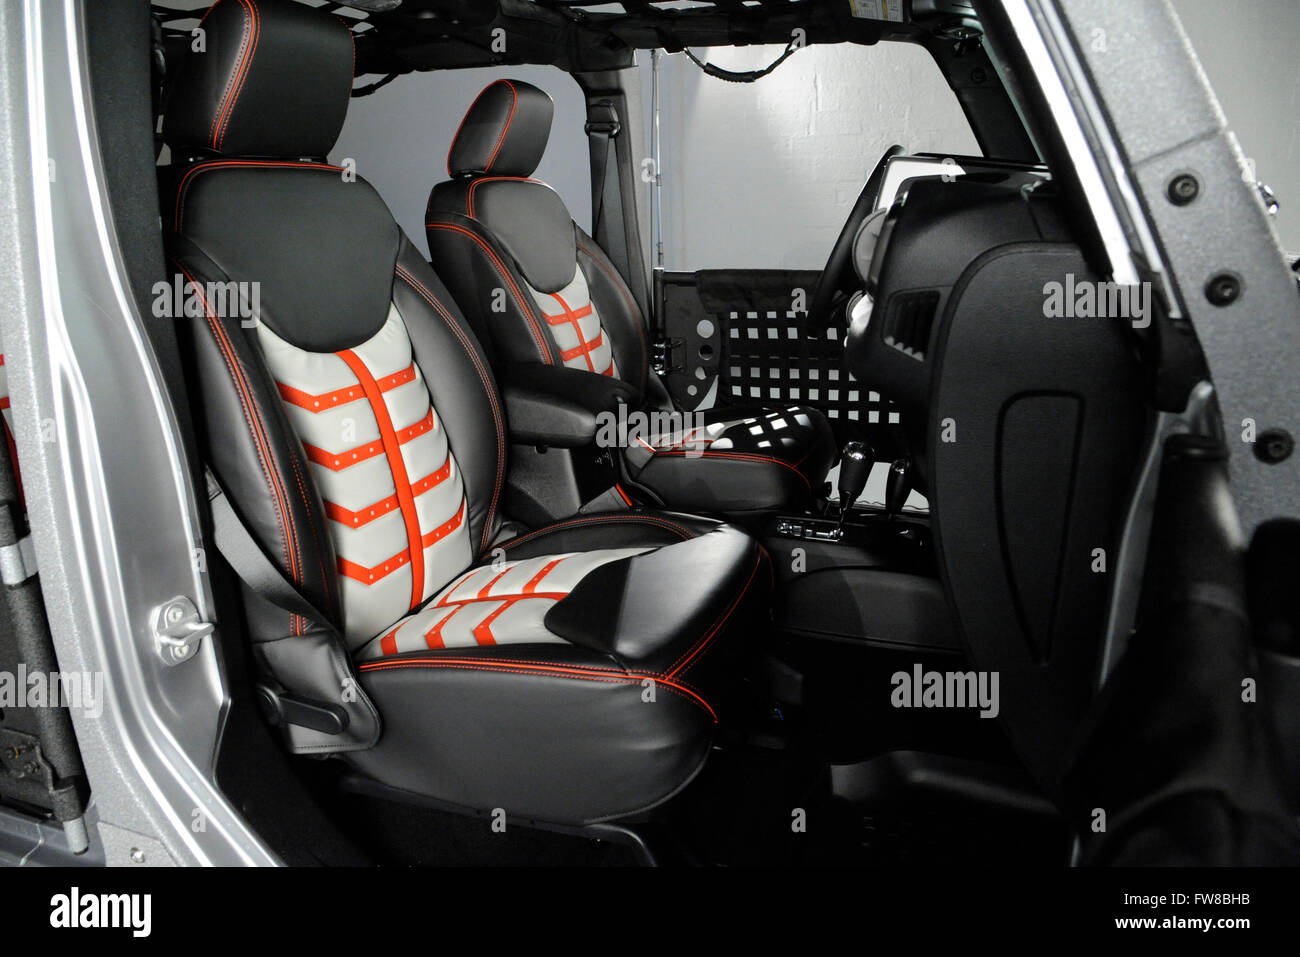 April 1 2016 Custom Jeep Wrangler With Custom Doors And